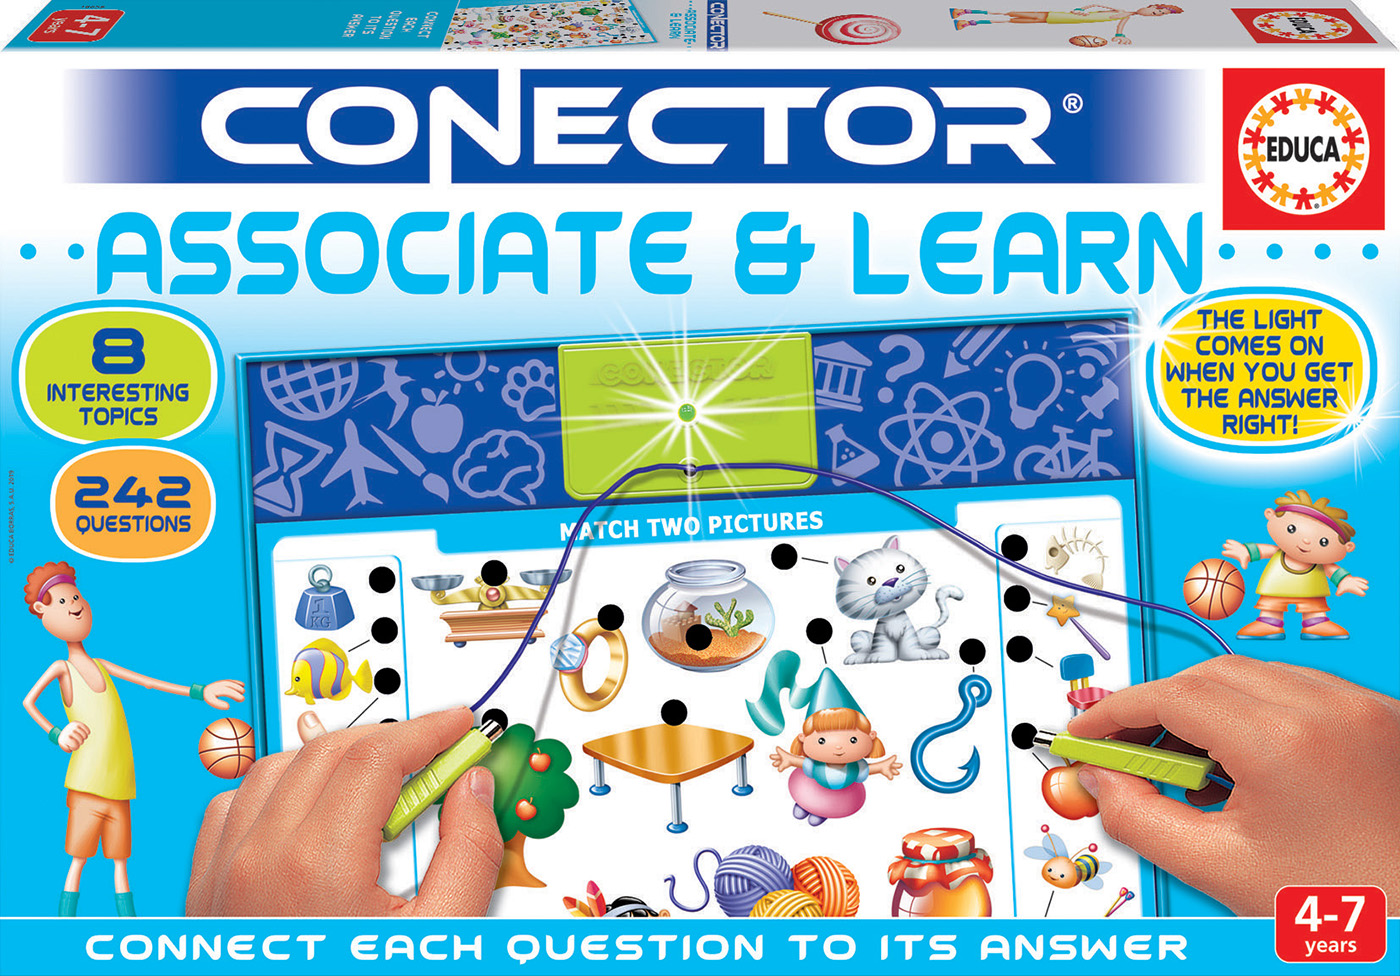 Conector Associate & Learn INTL